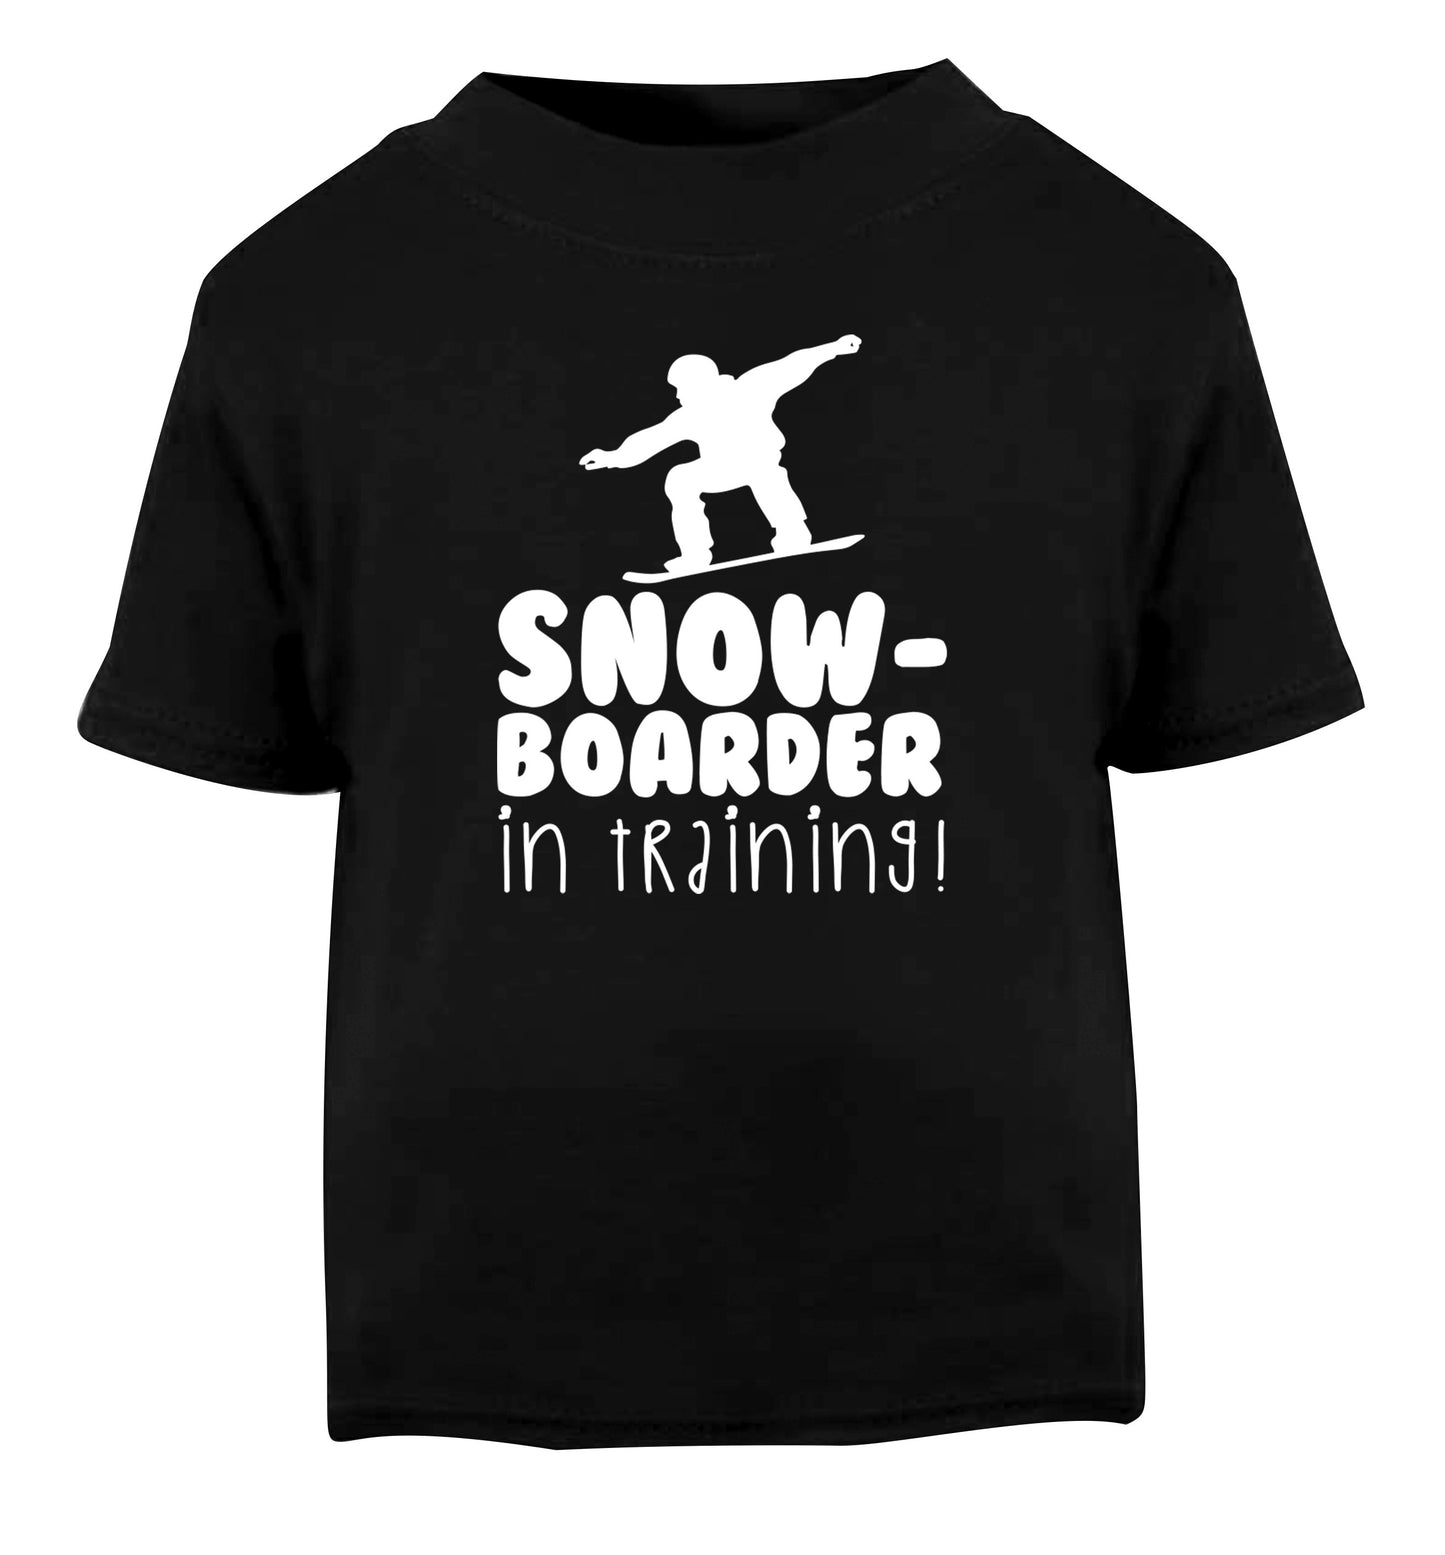 Snowboarder in training Black Baby Toddler Tshirt 2 years